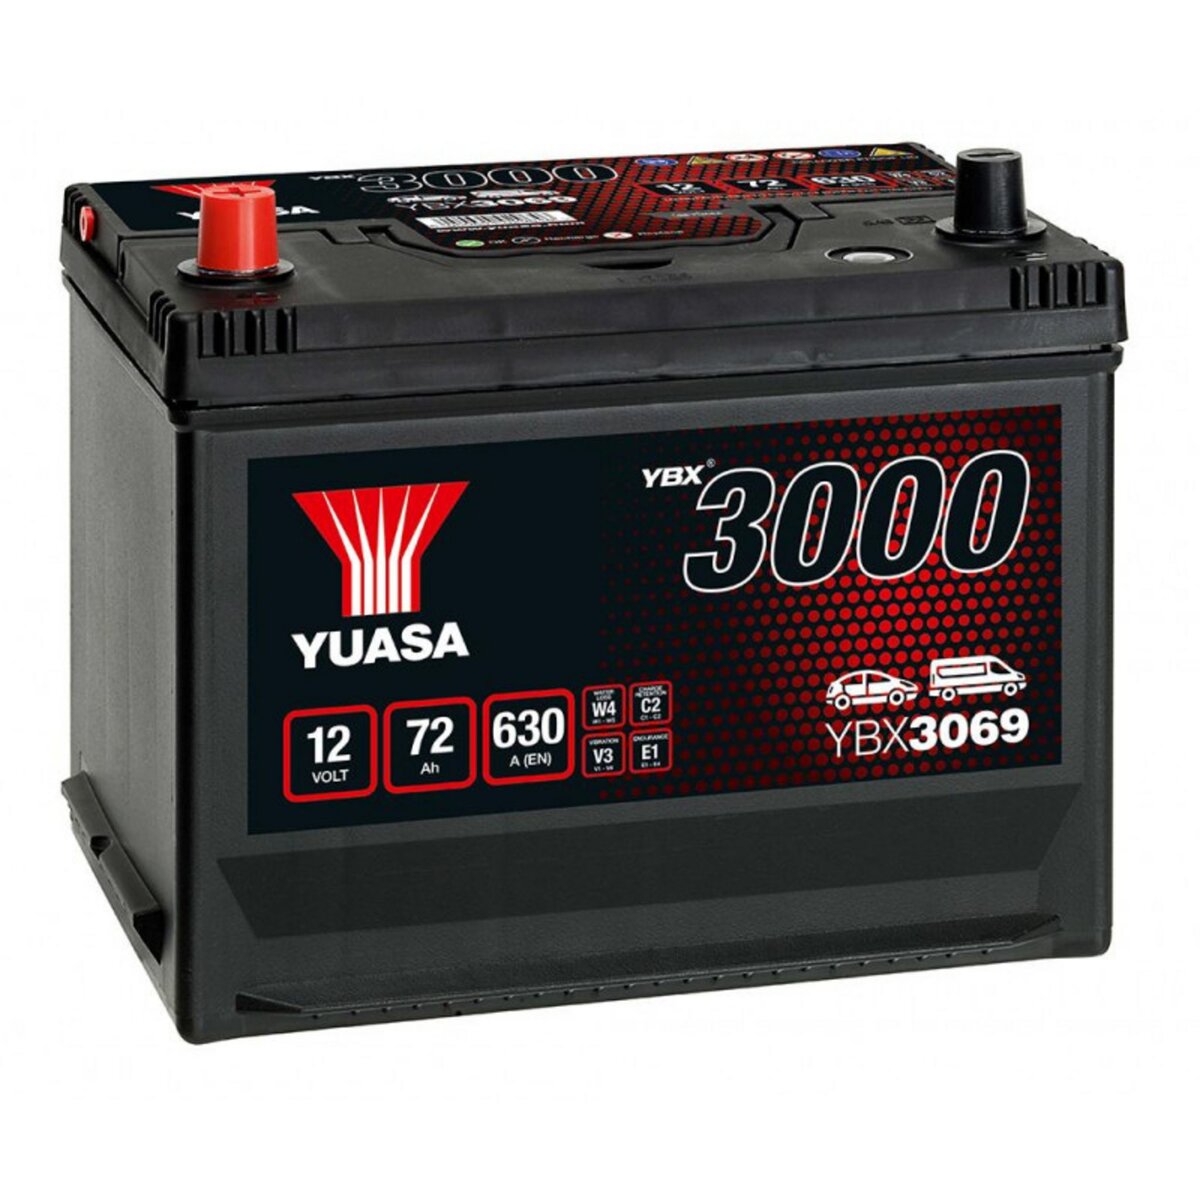 YUASA Batterie Yuasa SMF YBX3069 12V 72ah 630A